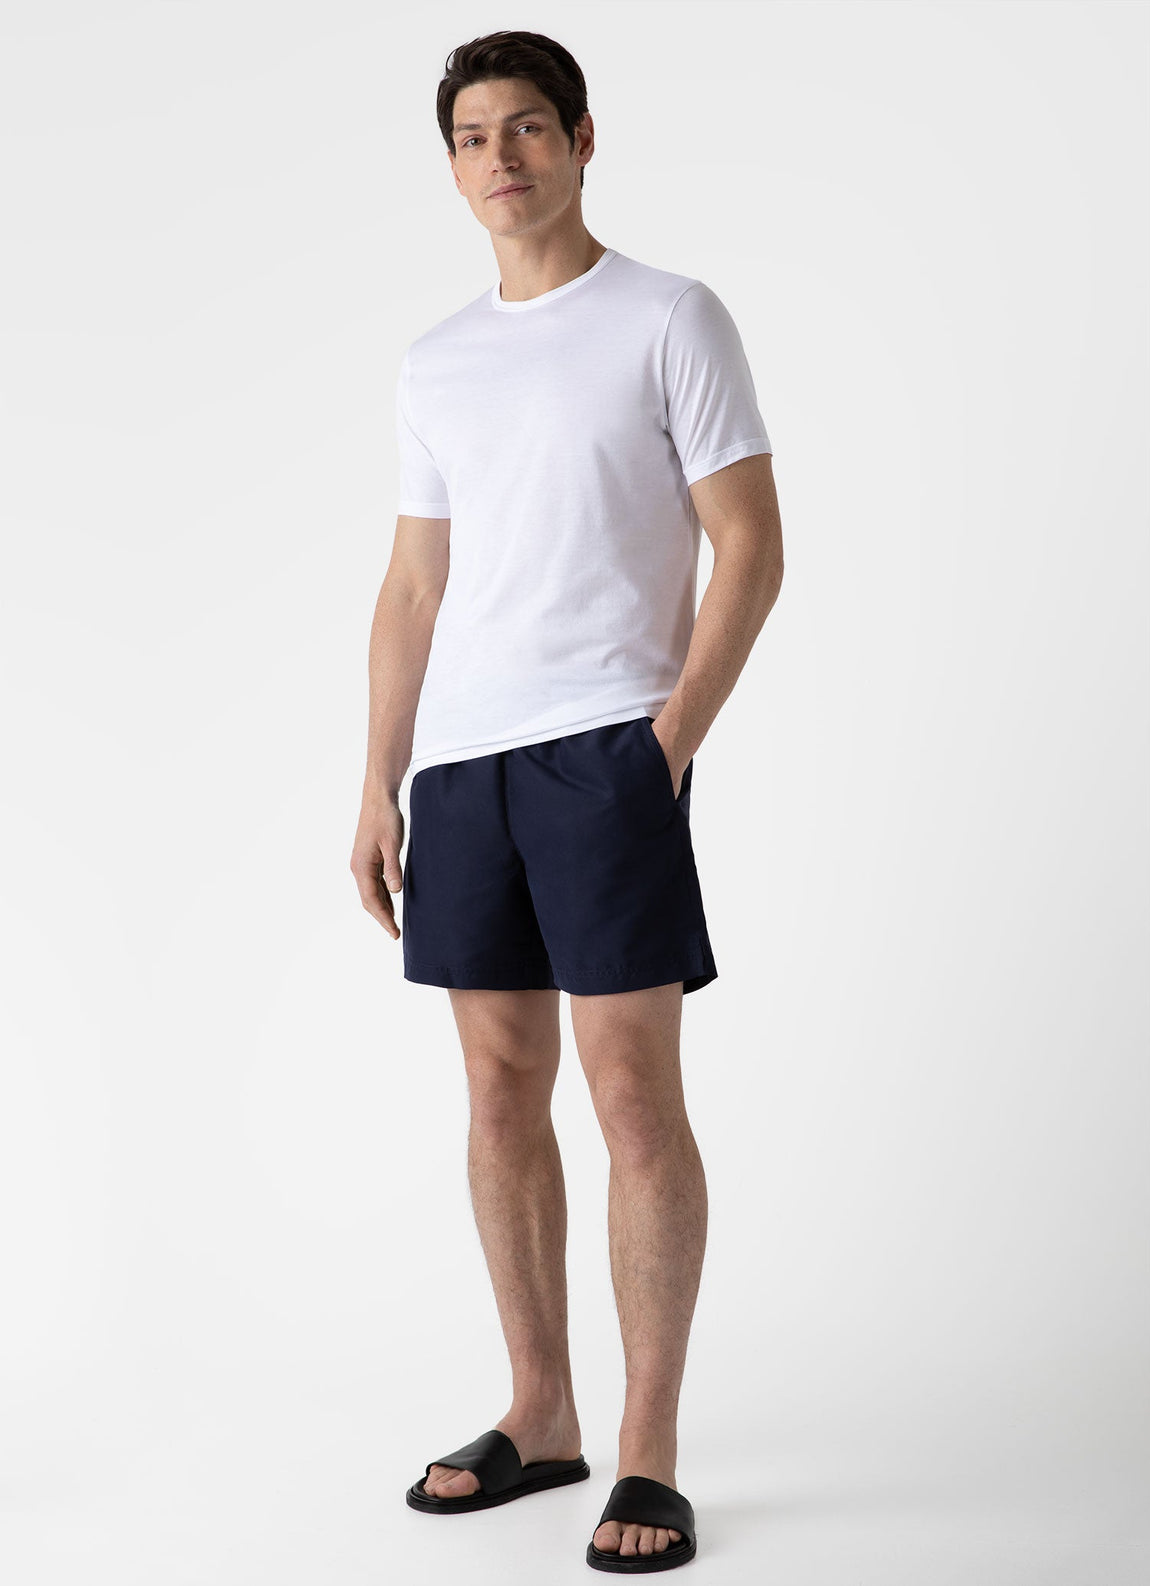 Men's Stretch Cotton Twill Chino Shorts in Light Stone